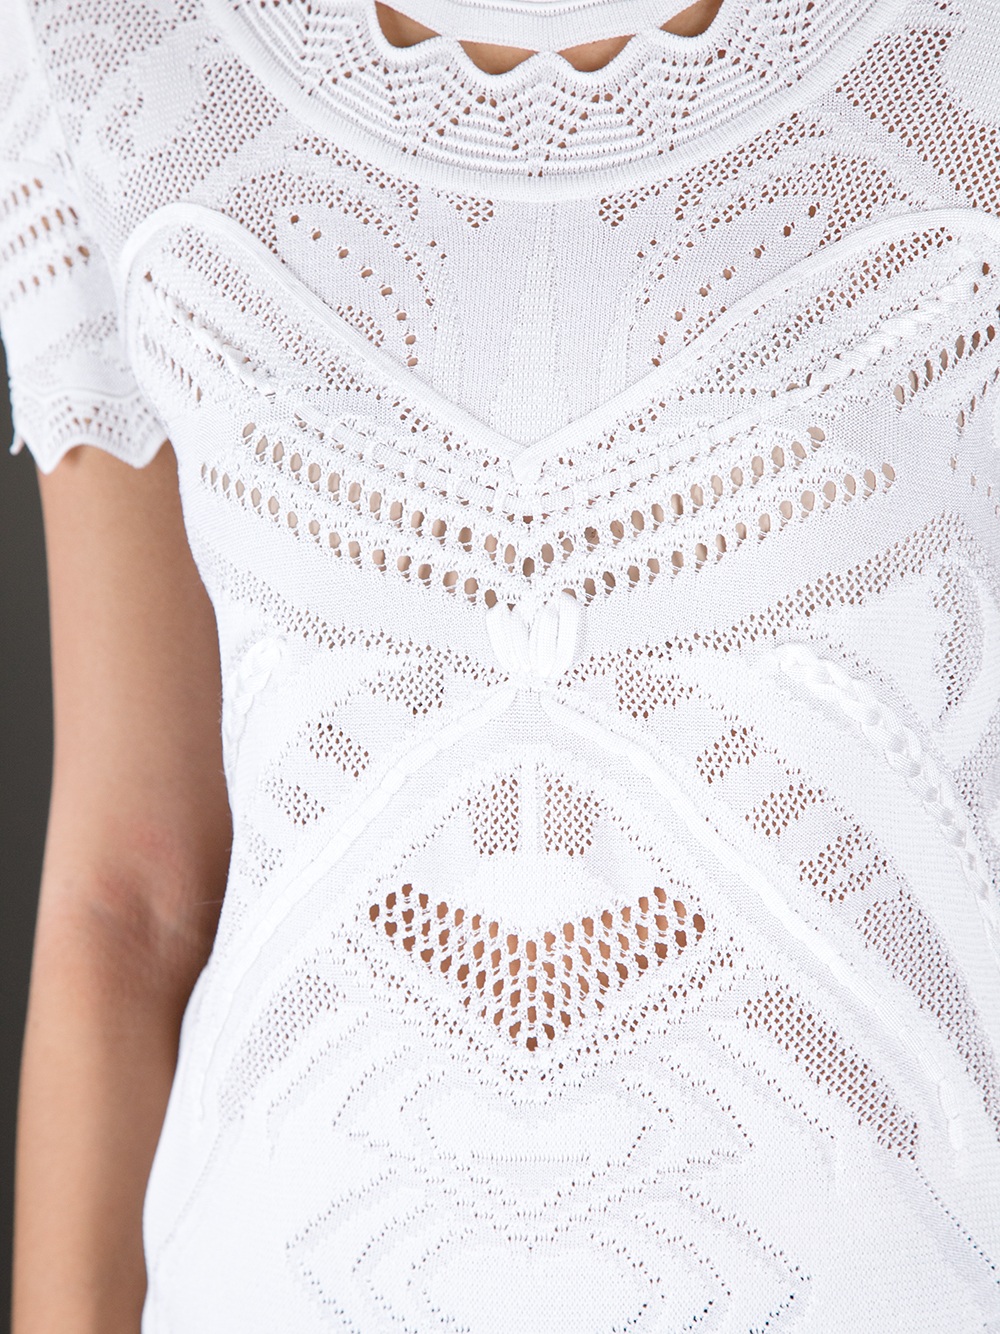 Lyst - Roberto cavalli Crochet Top in White